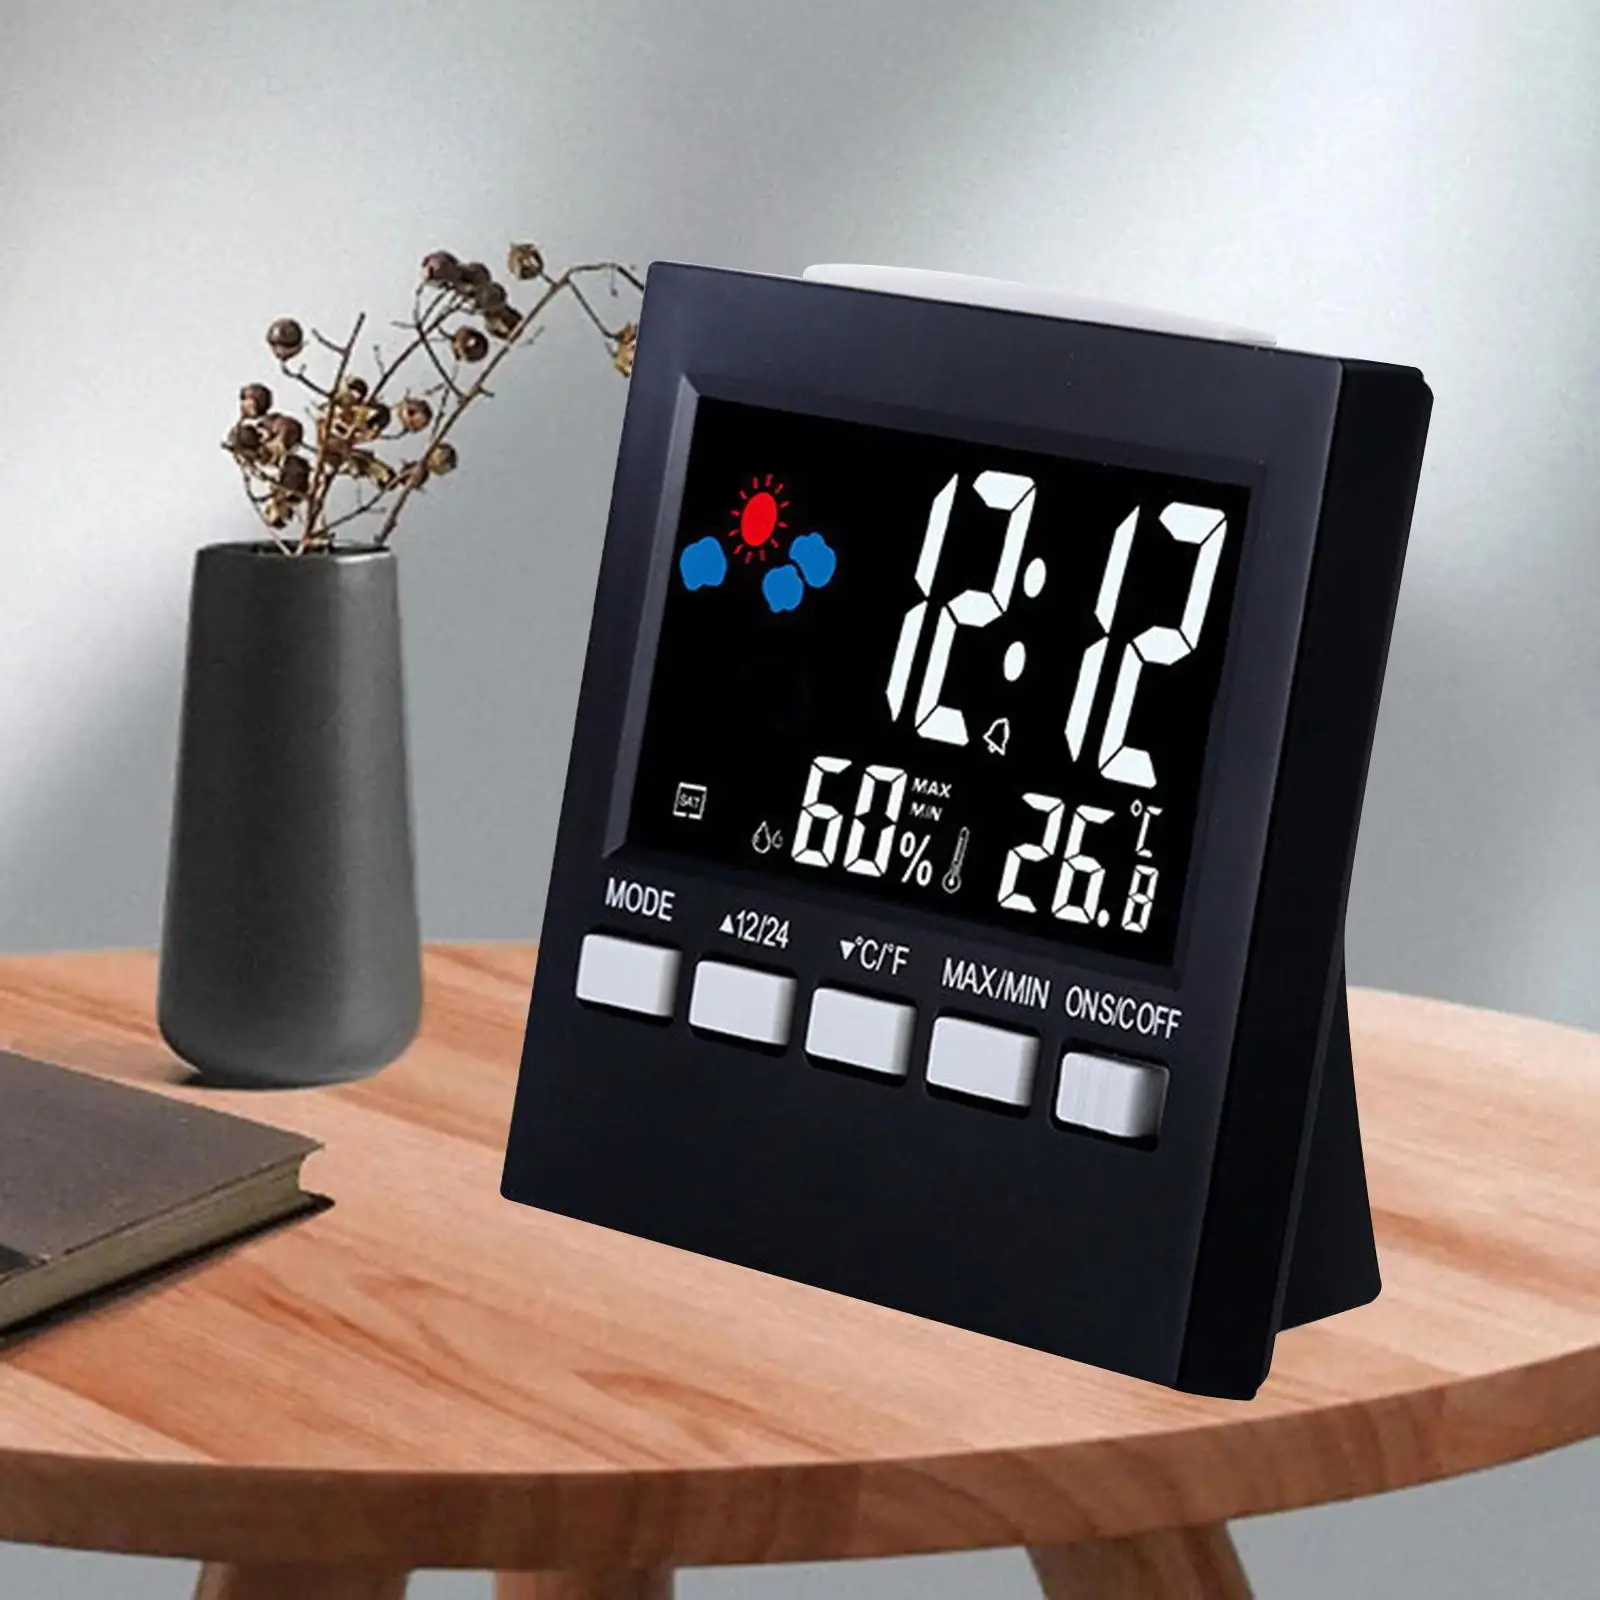  Clock Large Display Temperature Gauge Battery Operated Calendar Hygrometer Snooze 12/24H for Living Room Bedroom